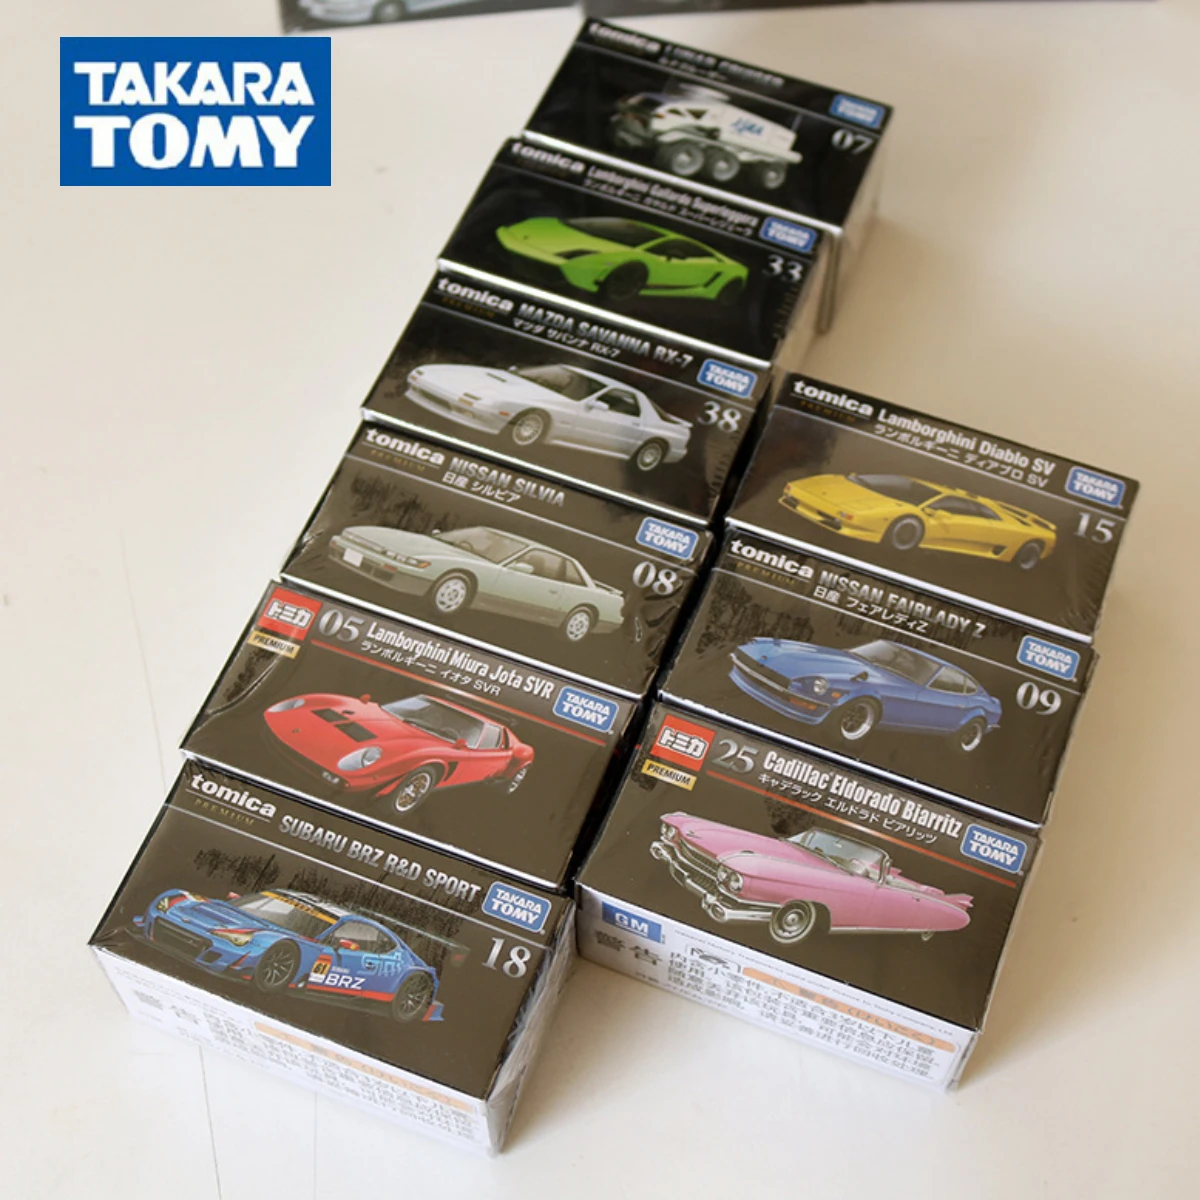 Takara טומי Tomica פרימיום TP, למבורגיני מיורה JOTA SVR מידה דגם המכונית העתק אוסף ילדים, מתנות Xmas צעצועים לילדים